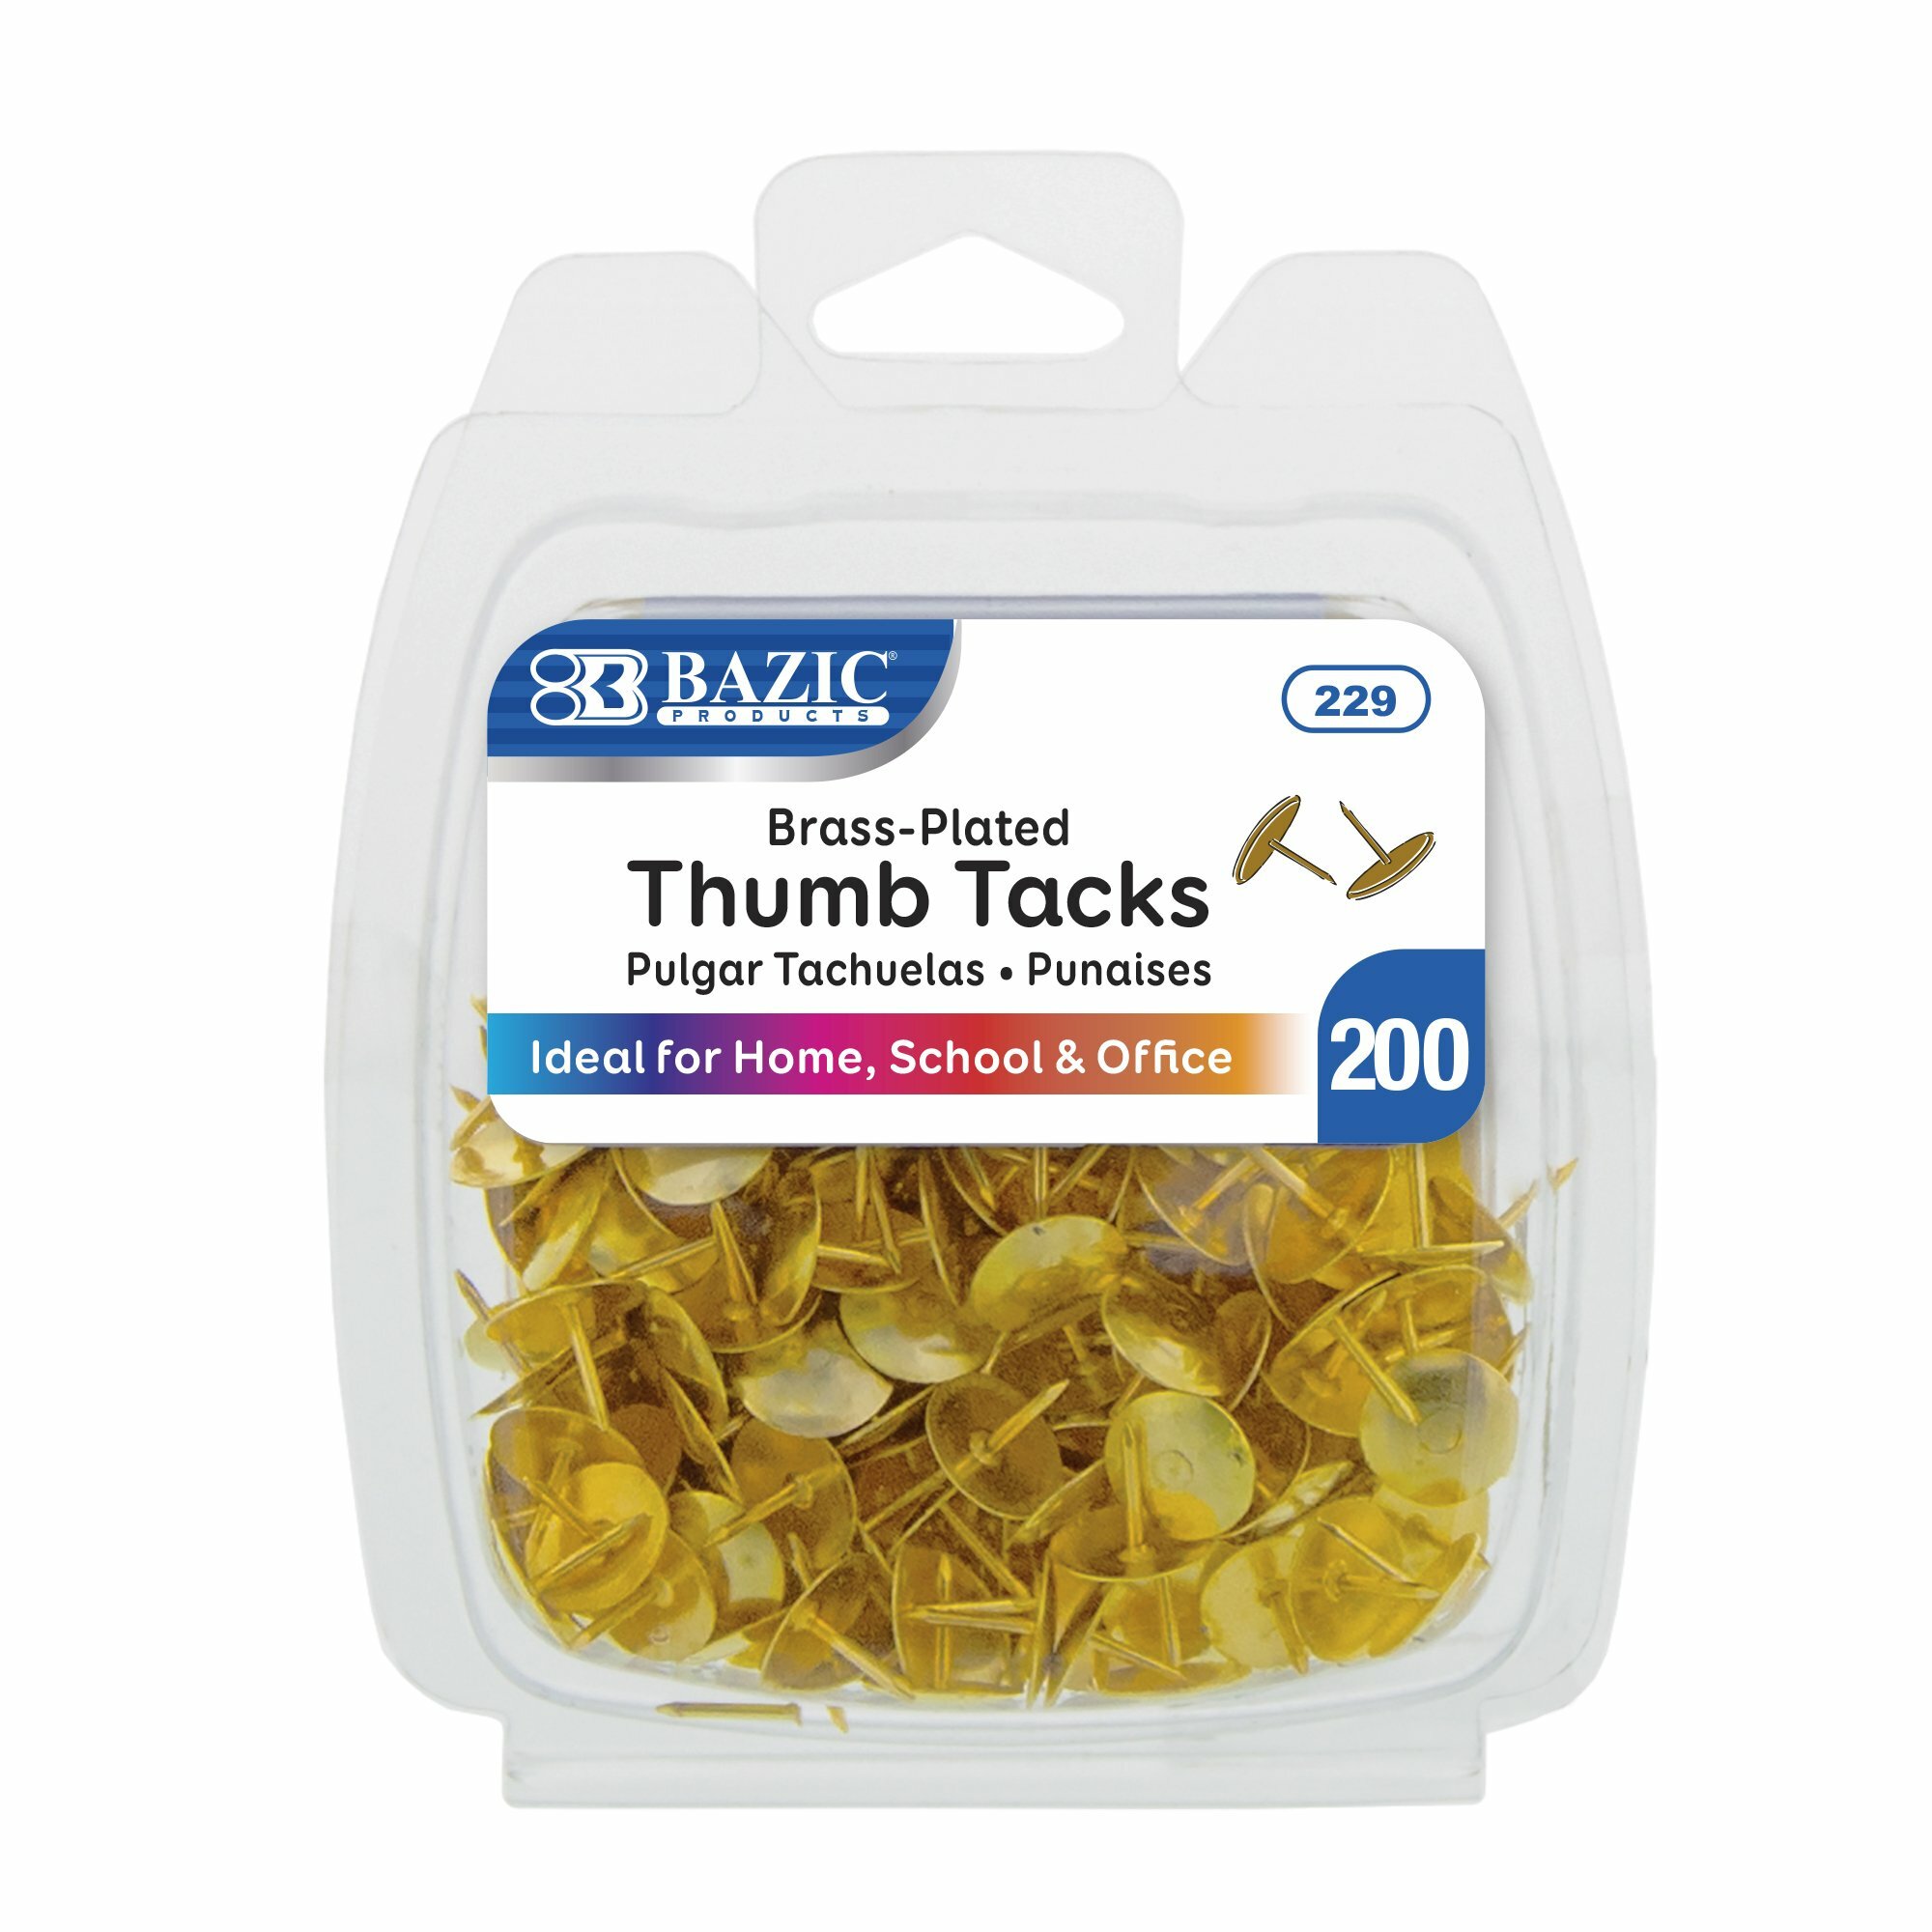 Thumb Tacks Bazic/GD 200Pk (I-6) (229)